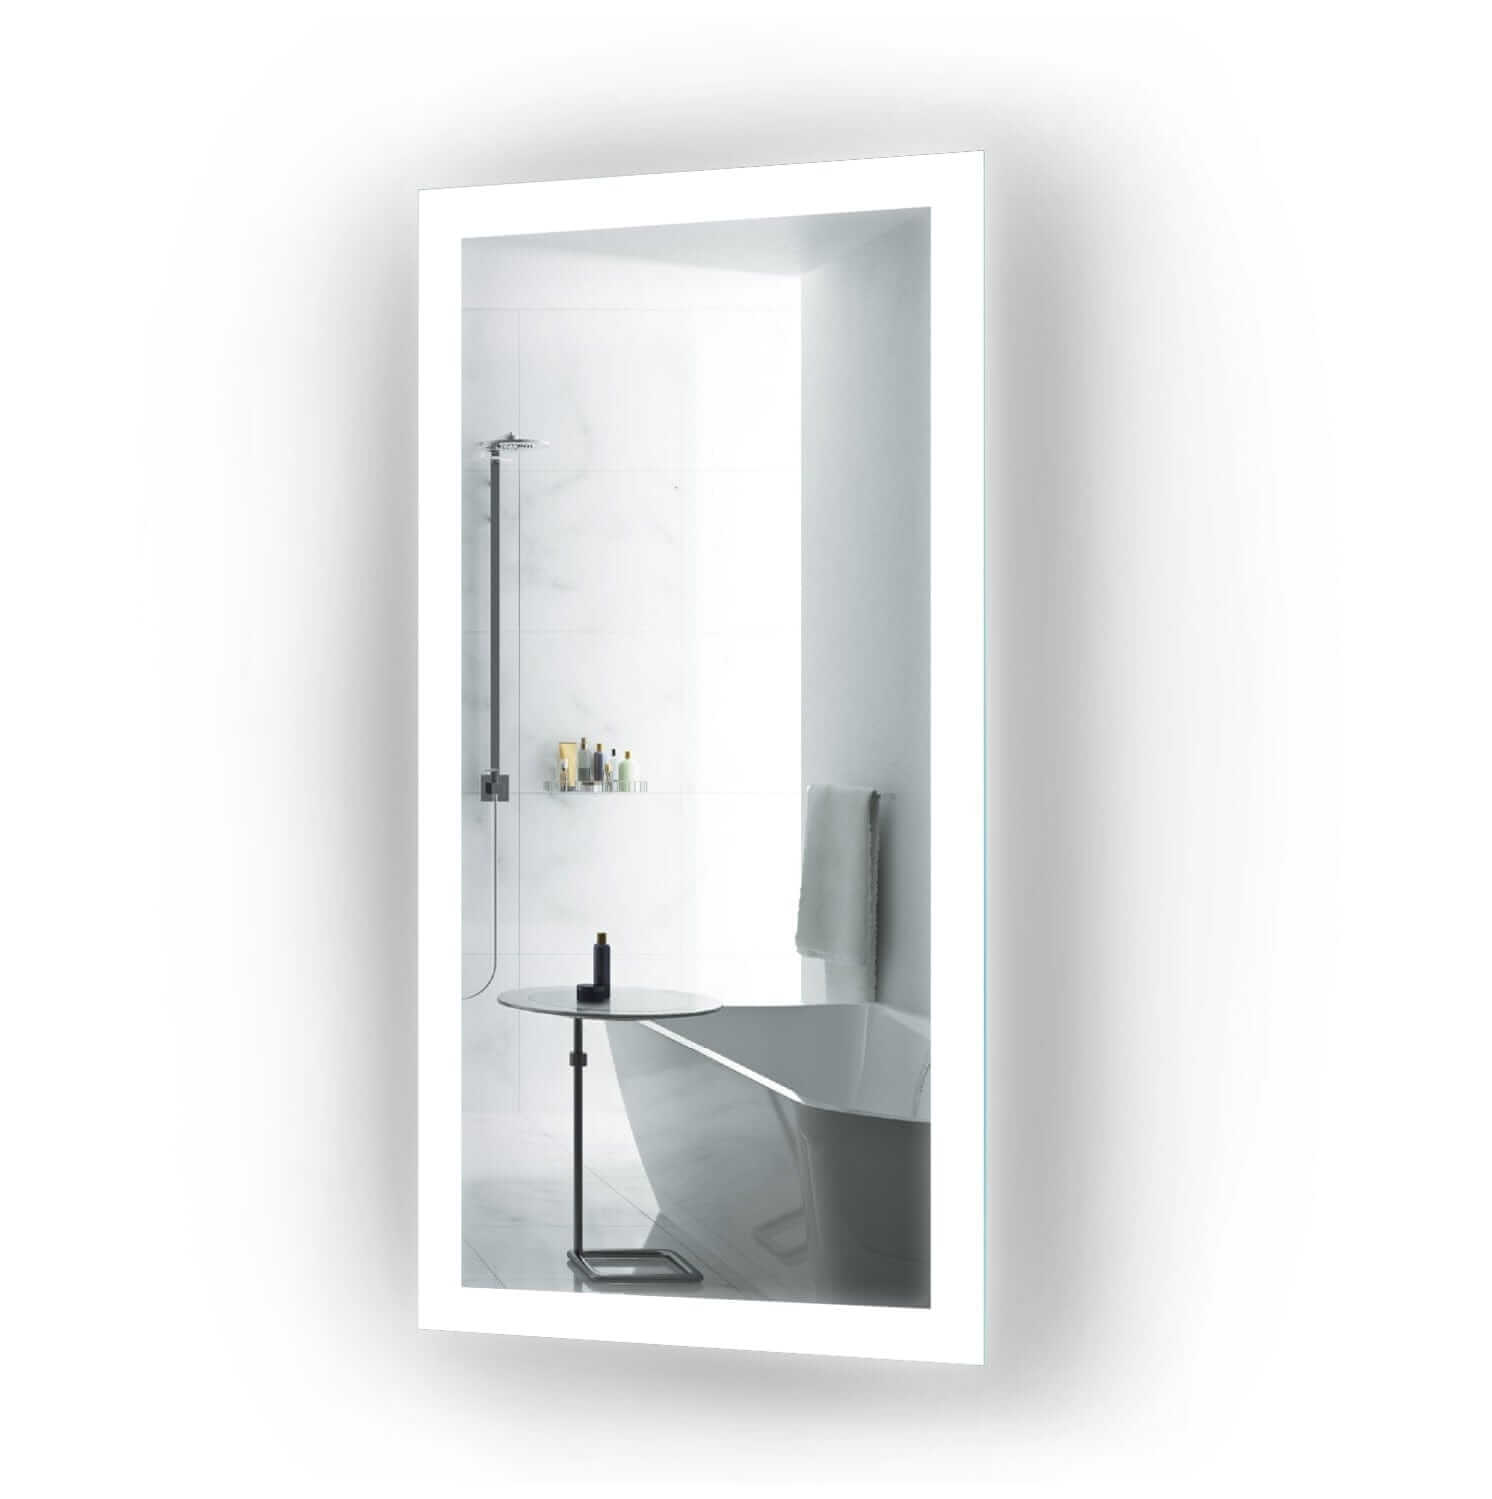 Krugg Bijou 15 X 30 bathroom mirror with dimming feature reflecting a white bathtub